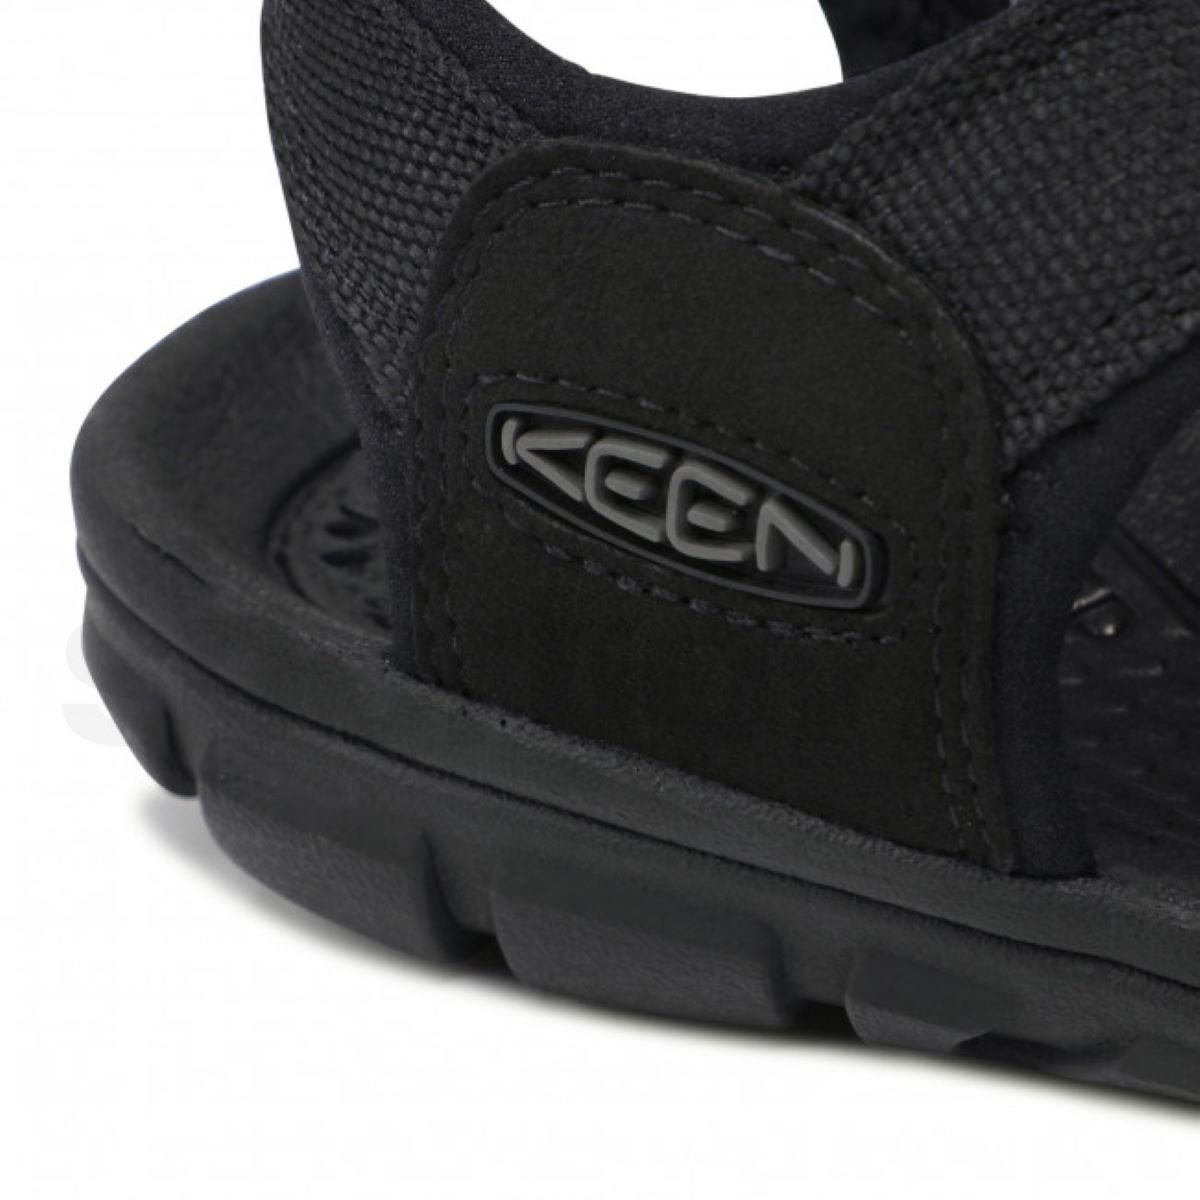 Obuv - sandály Keen Clearwater CNX M - černá